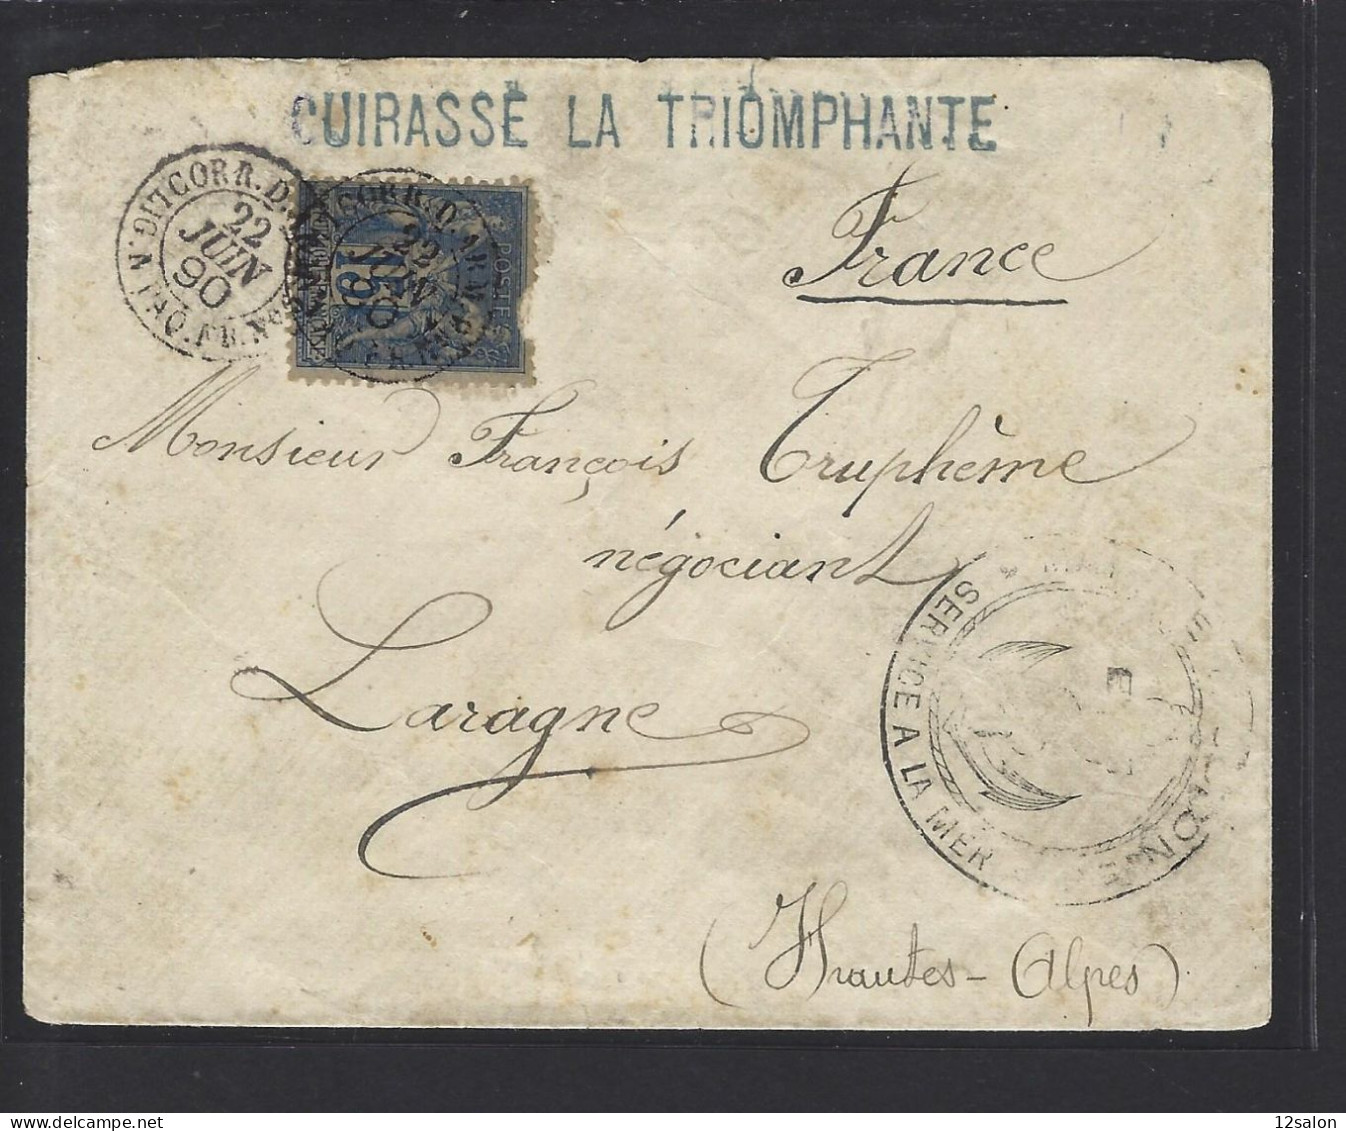 MARITIME SAGE °90, Def, OBL CAD "Corr D Arm Lig N Paq FR N°8" (1890 - Salles N°1949) "Cuirassé La Triomphante" - Maritime Post